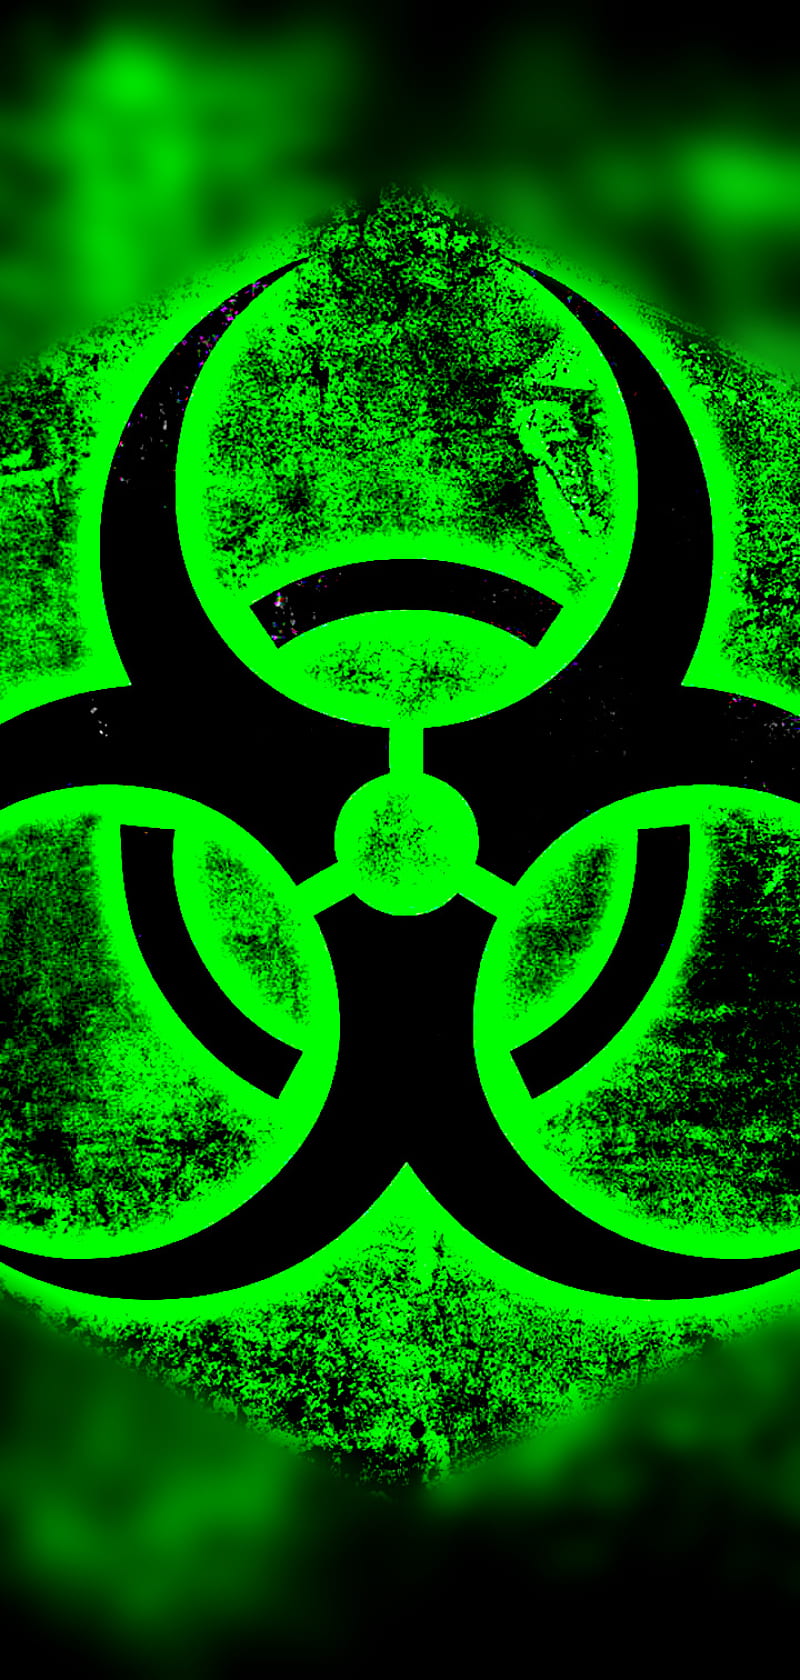 zombie biohazard symbol wallpaper